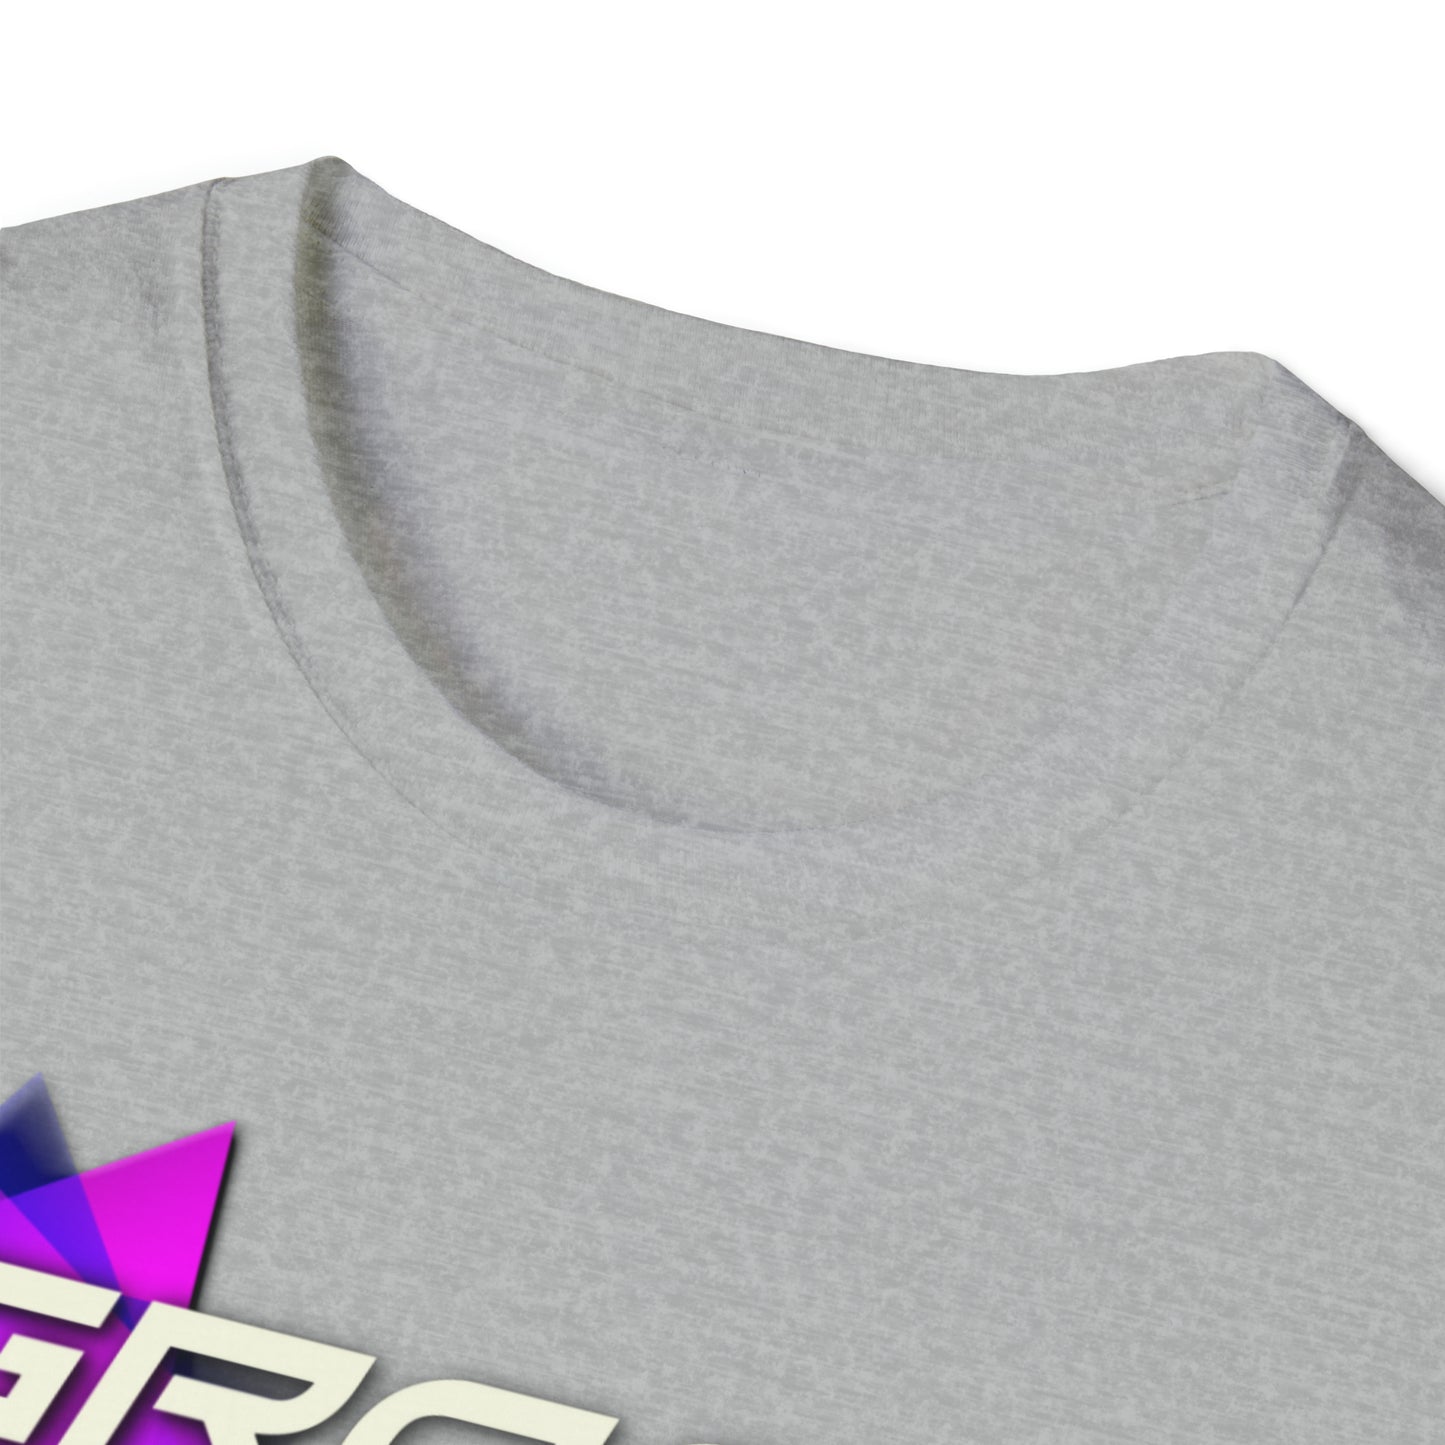 Unisex Groove Shack Softstyle T-Shirt